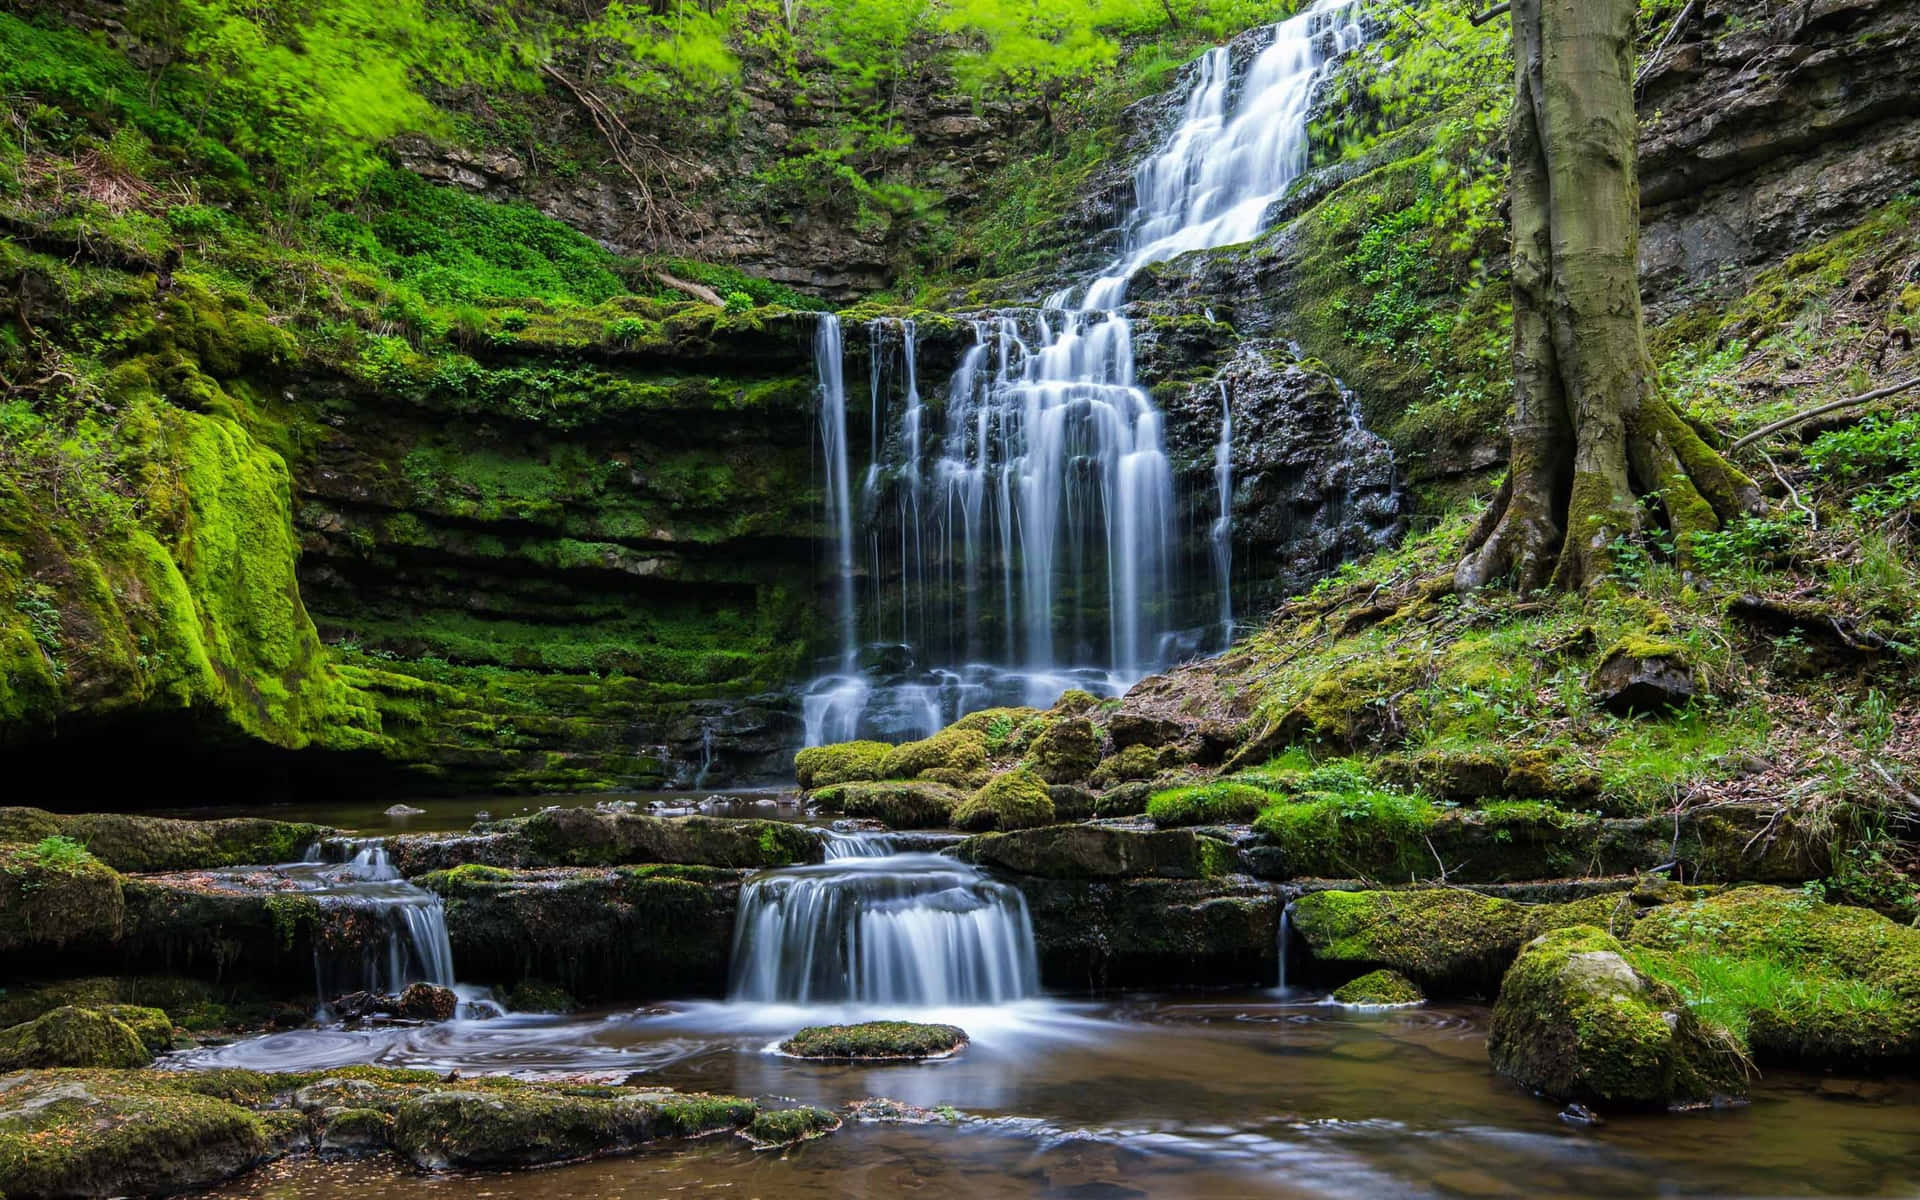 A beautiful waterfall cascading down a rocky riverbank.